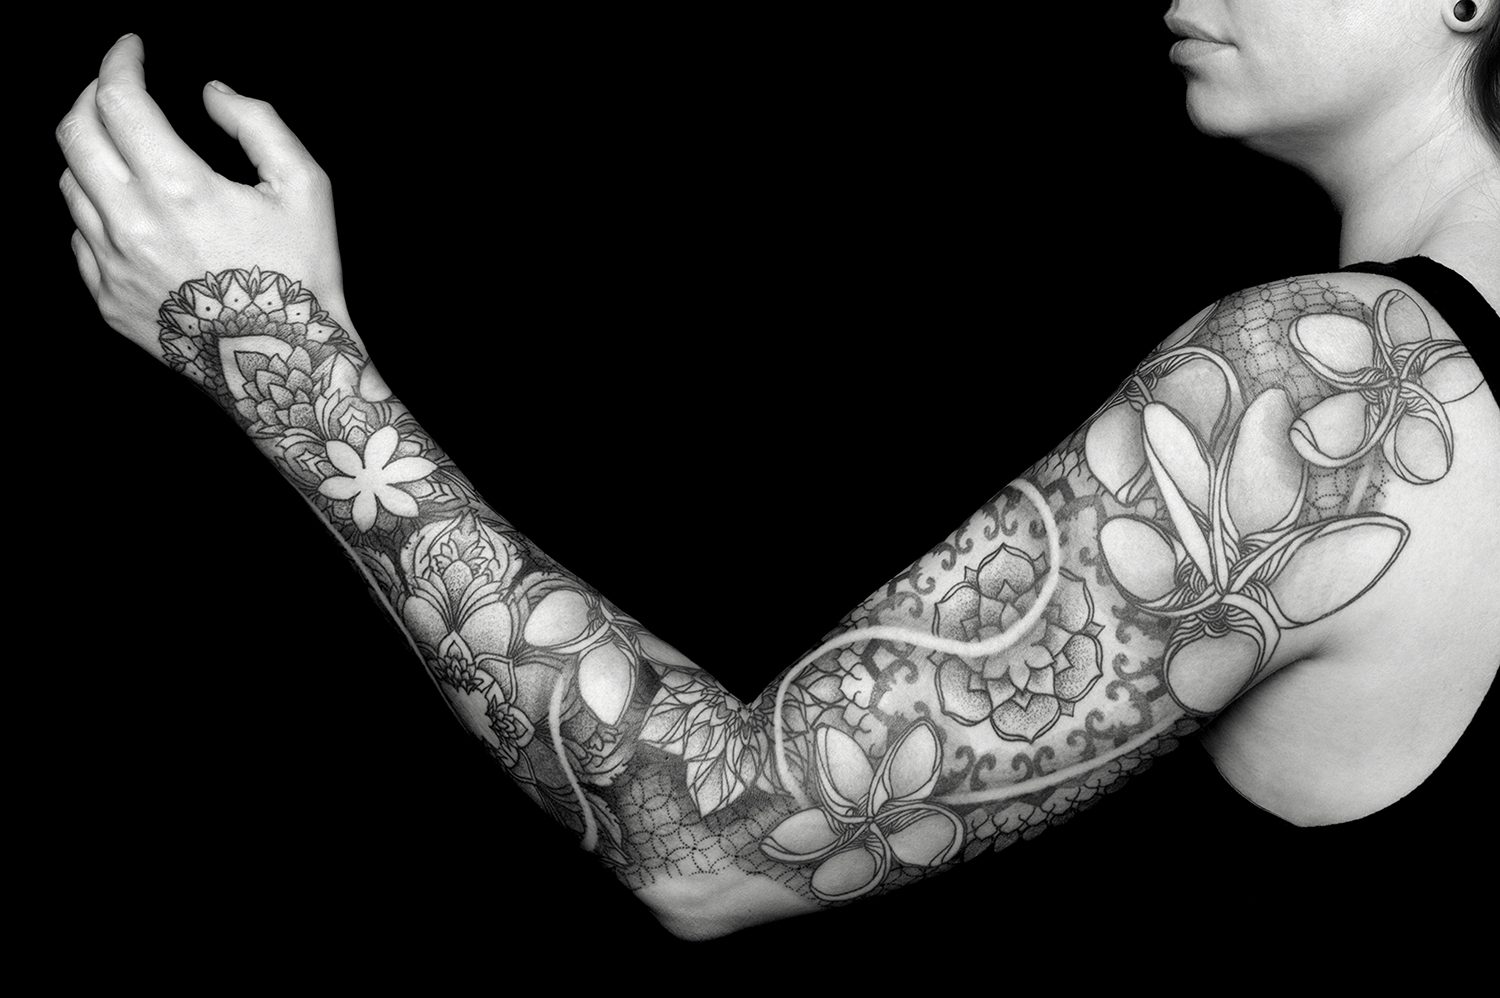 eastern asia style tattoo sleeve by chaim machlev. photo © erik weiss